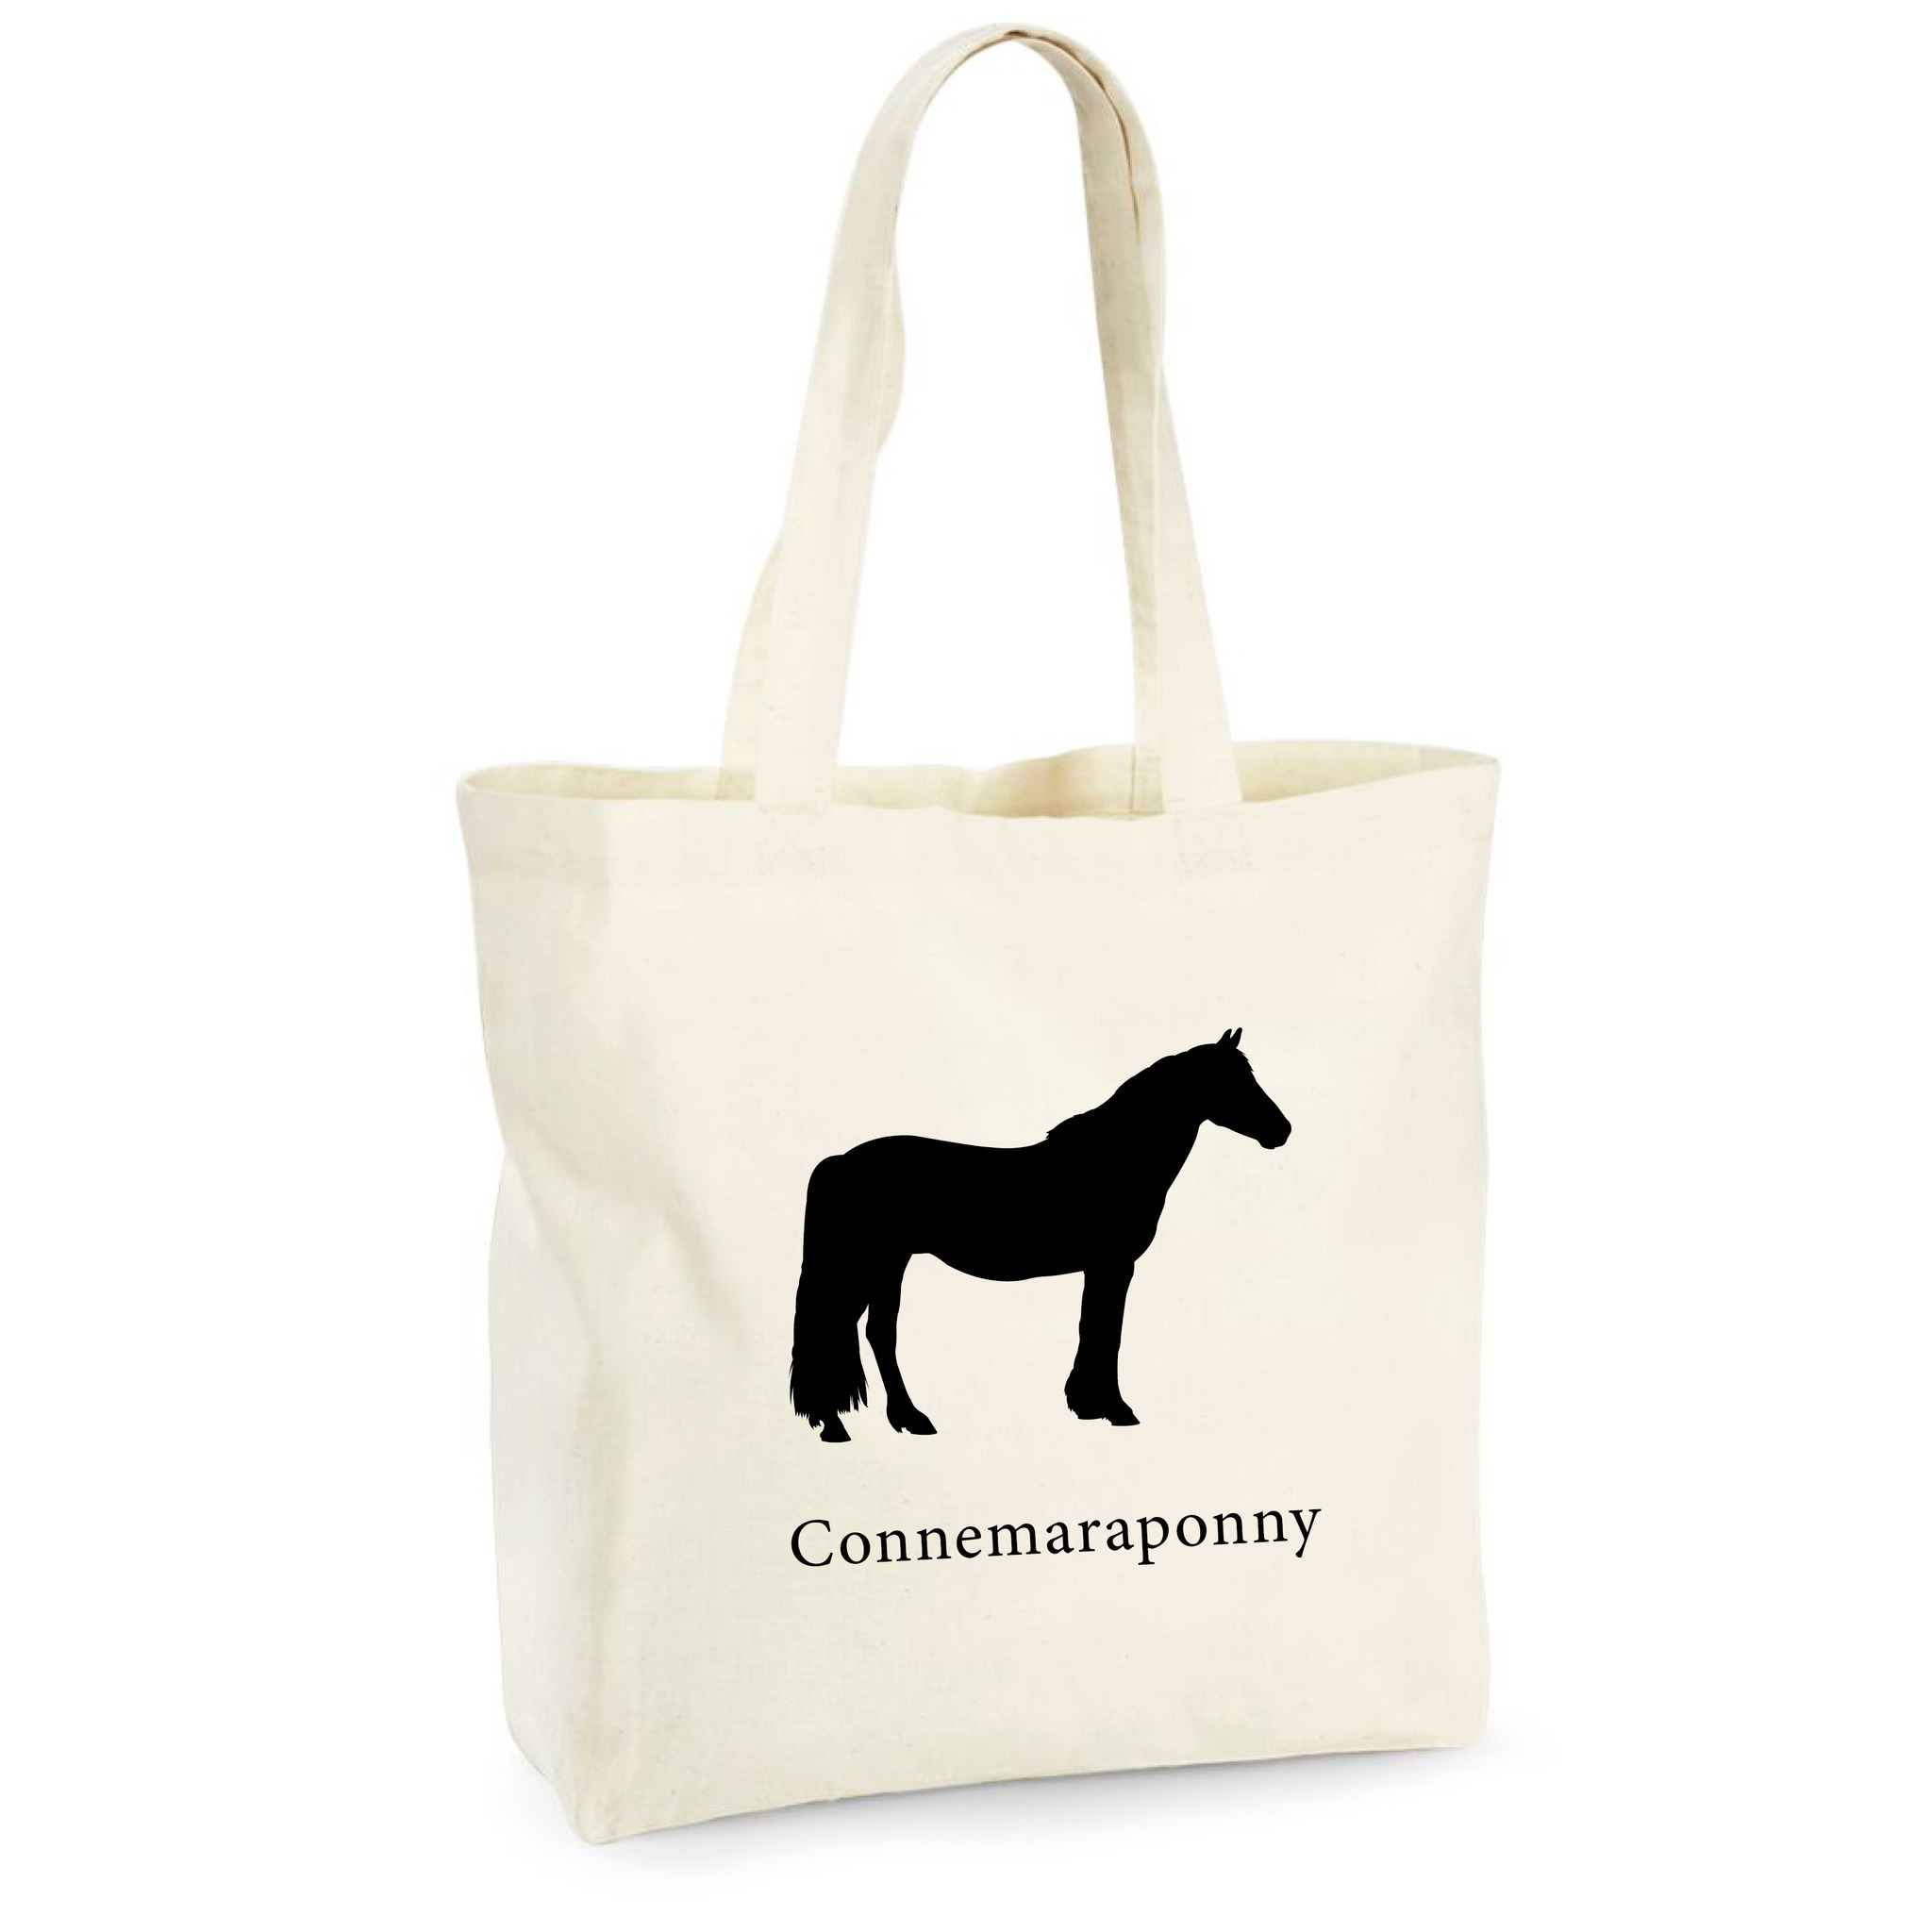 Tygkasse Connemaraponny - Maxi bag